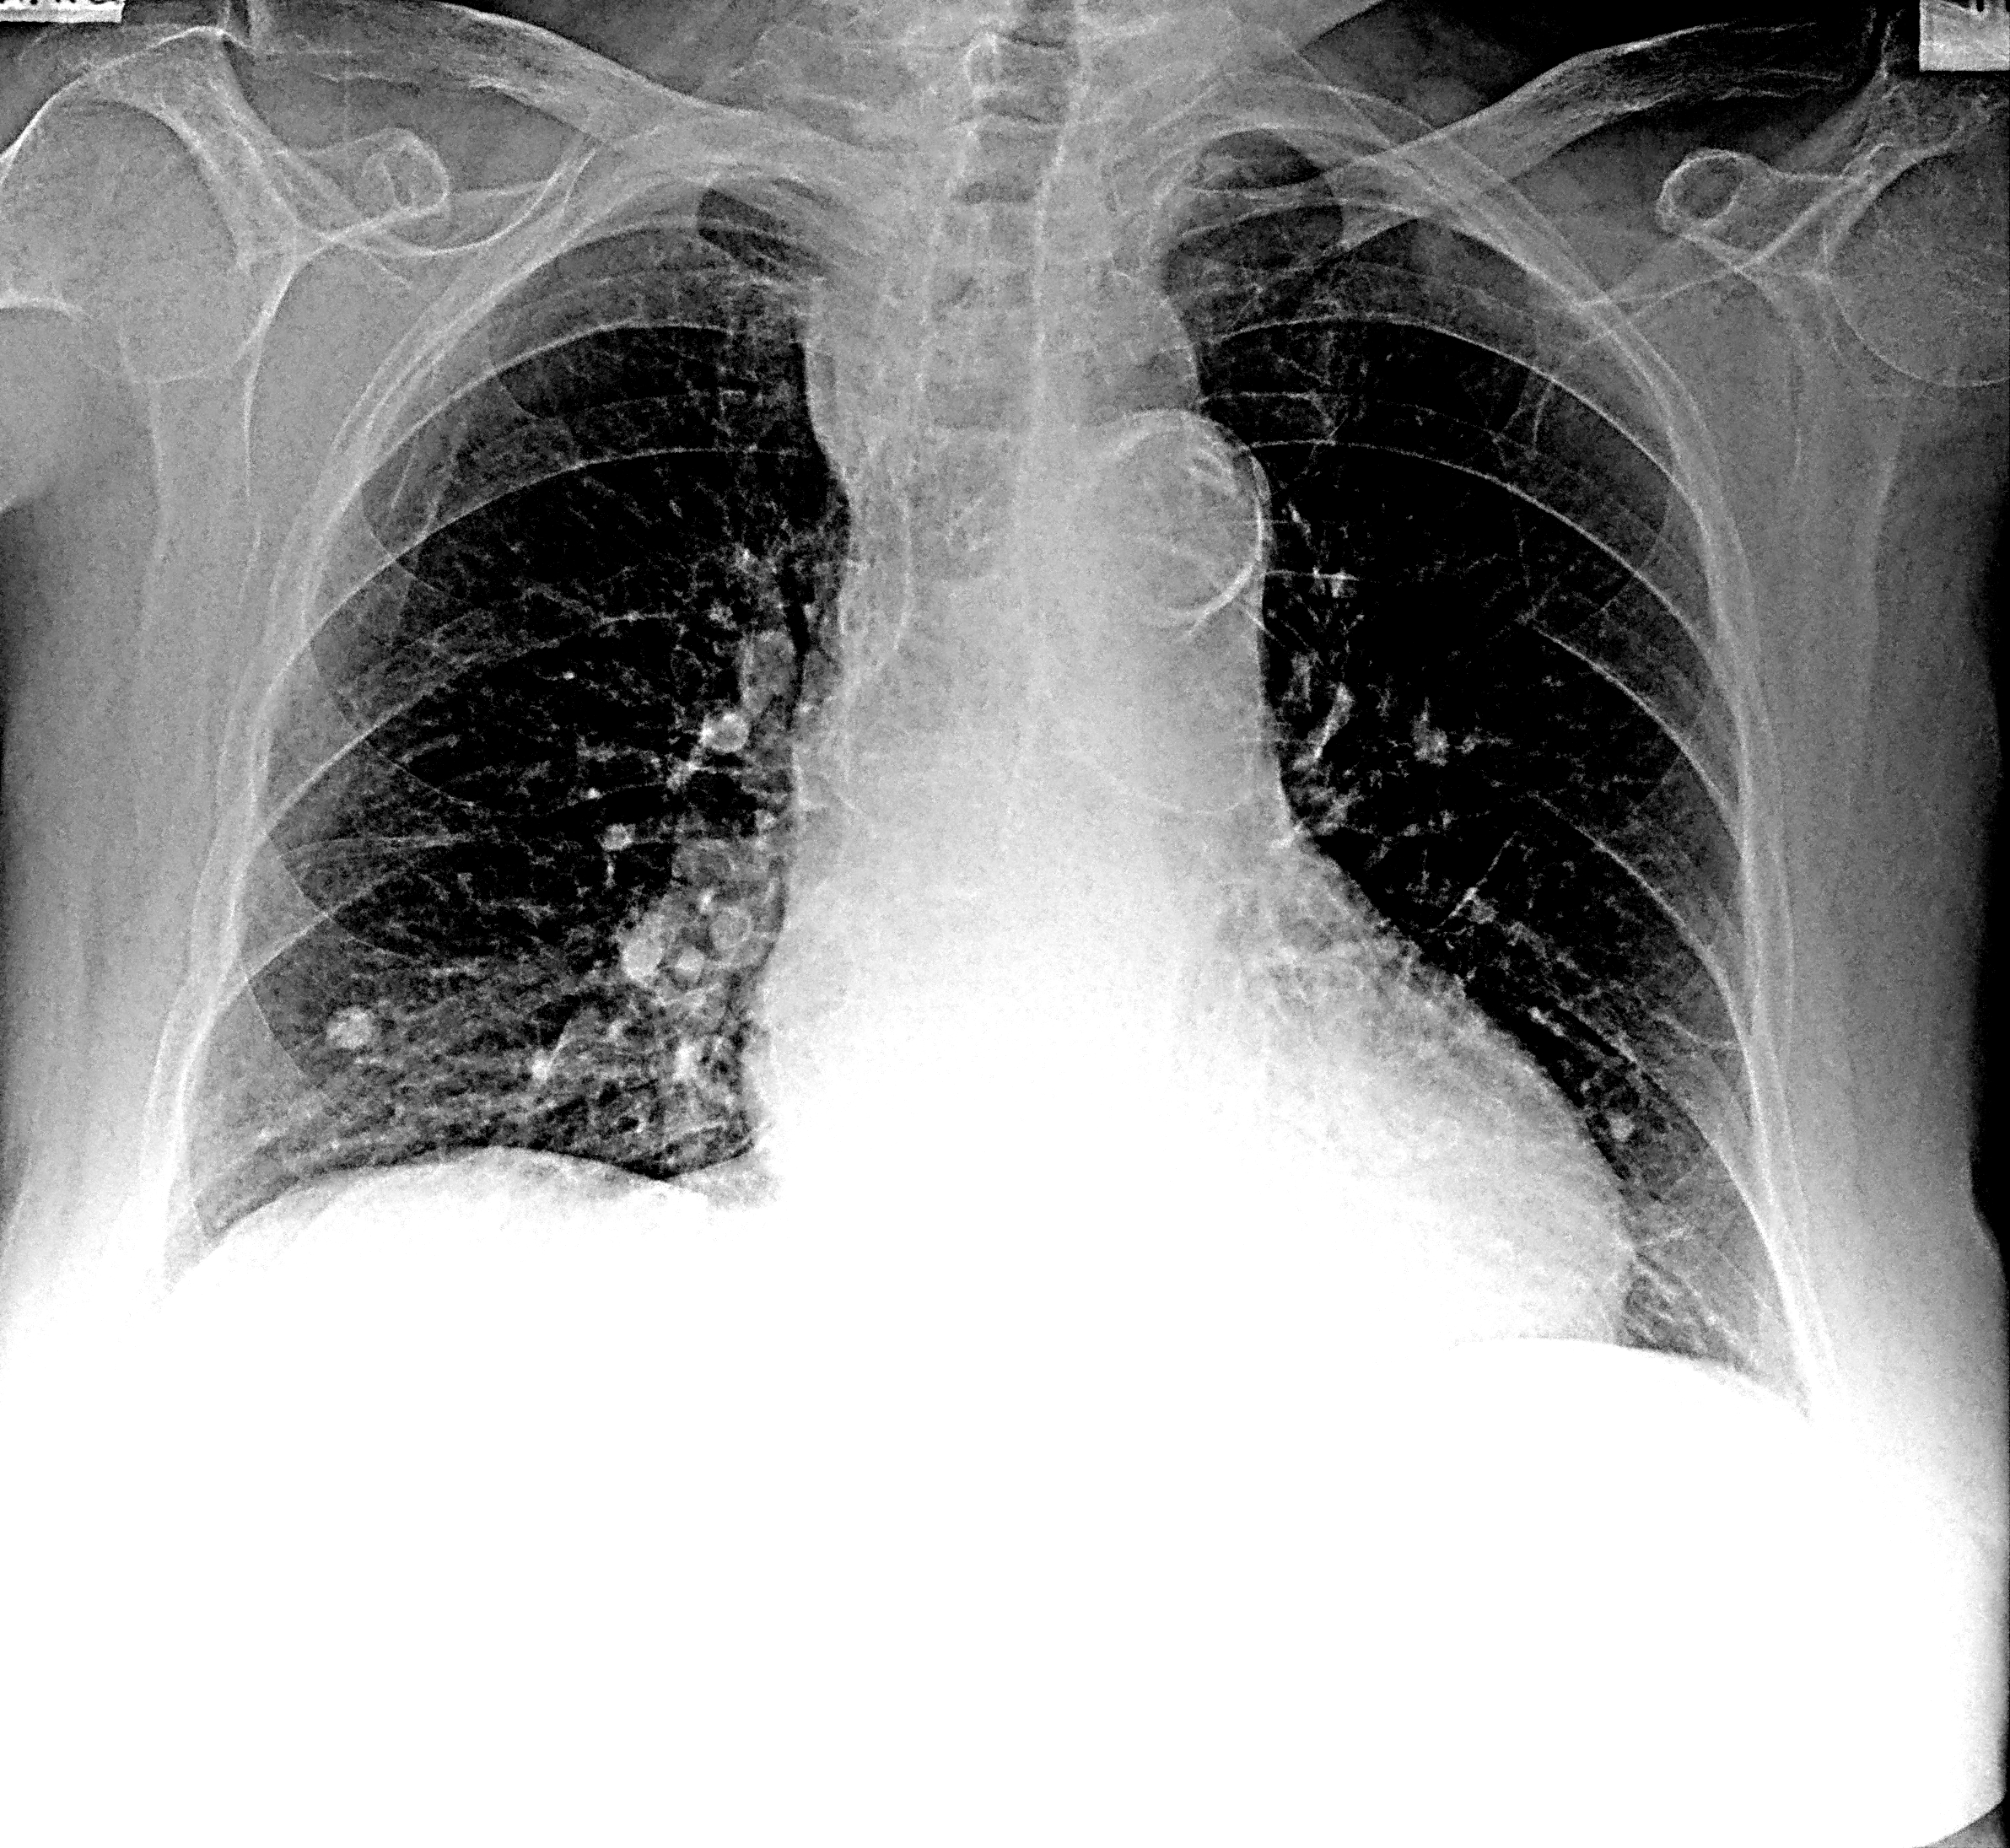 Поражение легких при коронавирусе фото рентгена